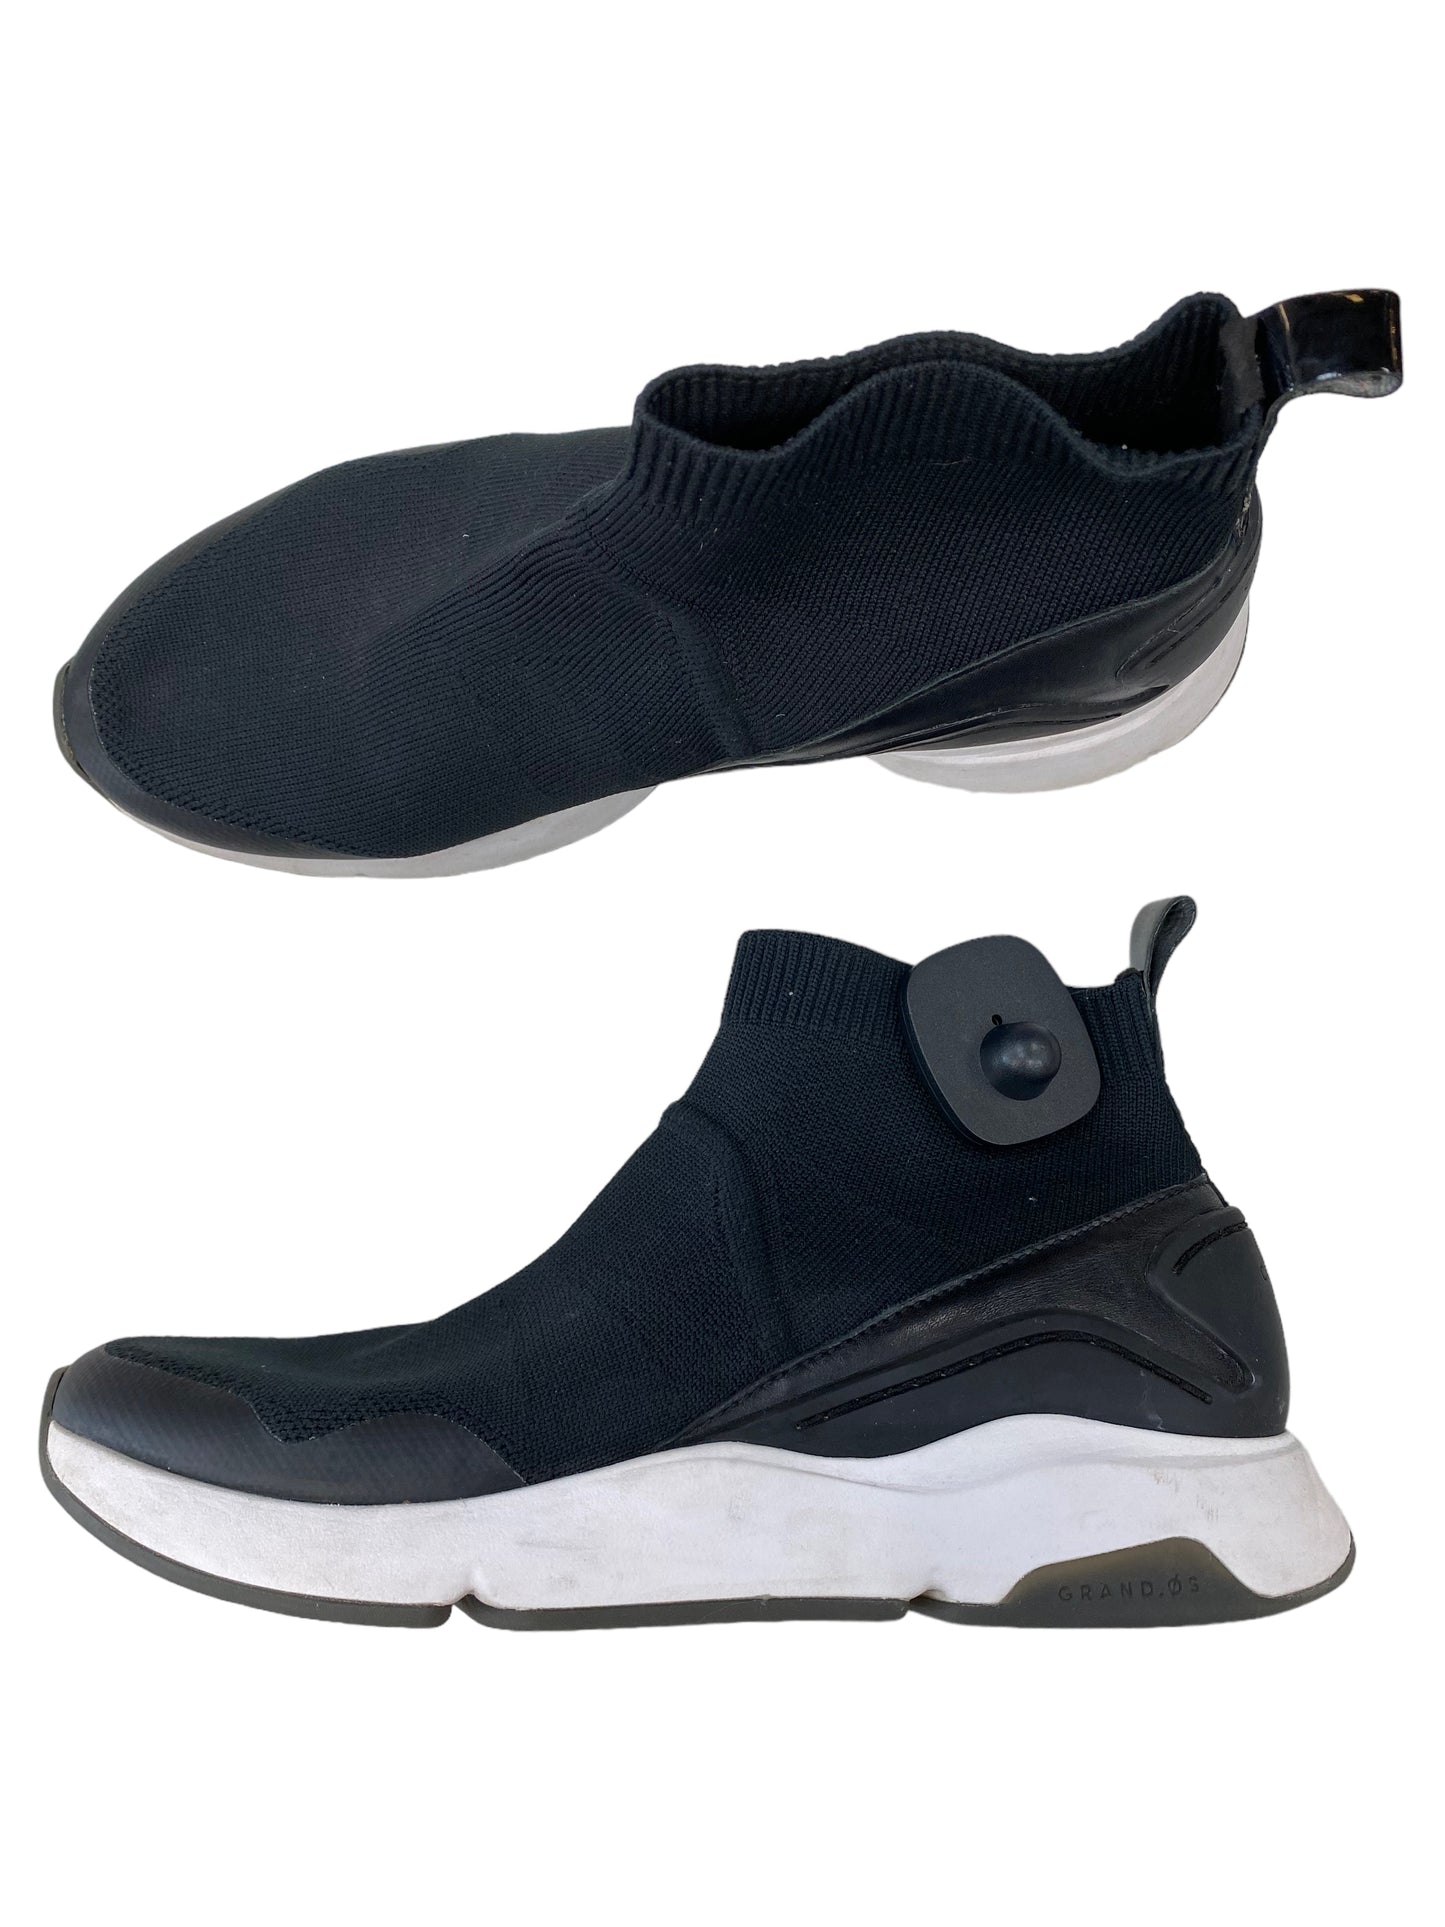 Black Shoes Athletic Cole-haan, Size 8